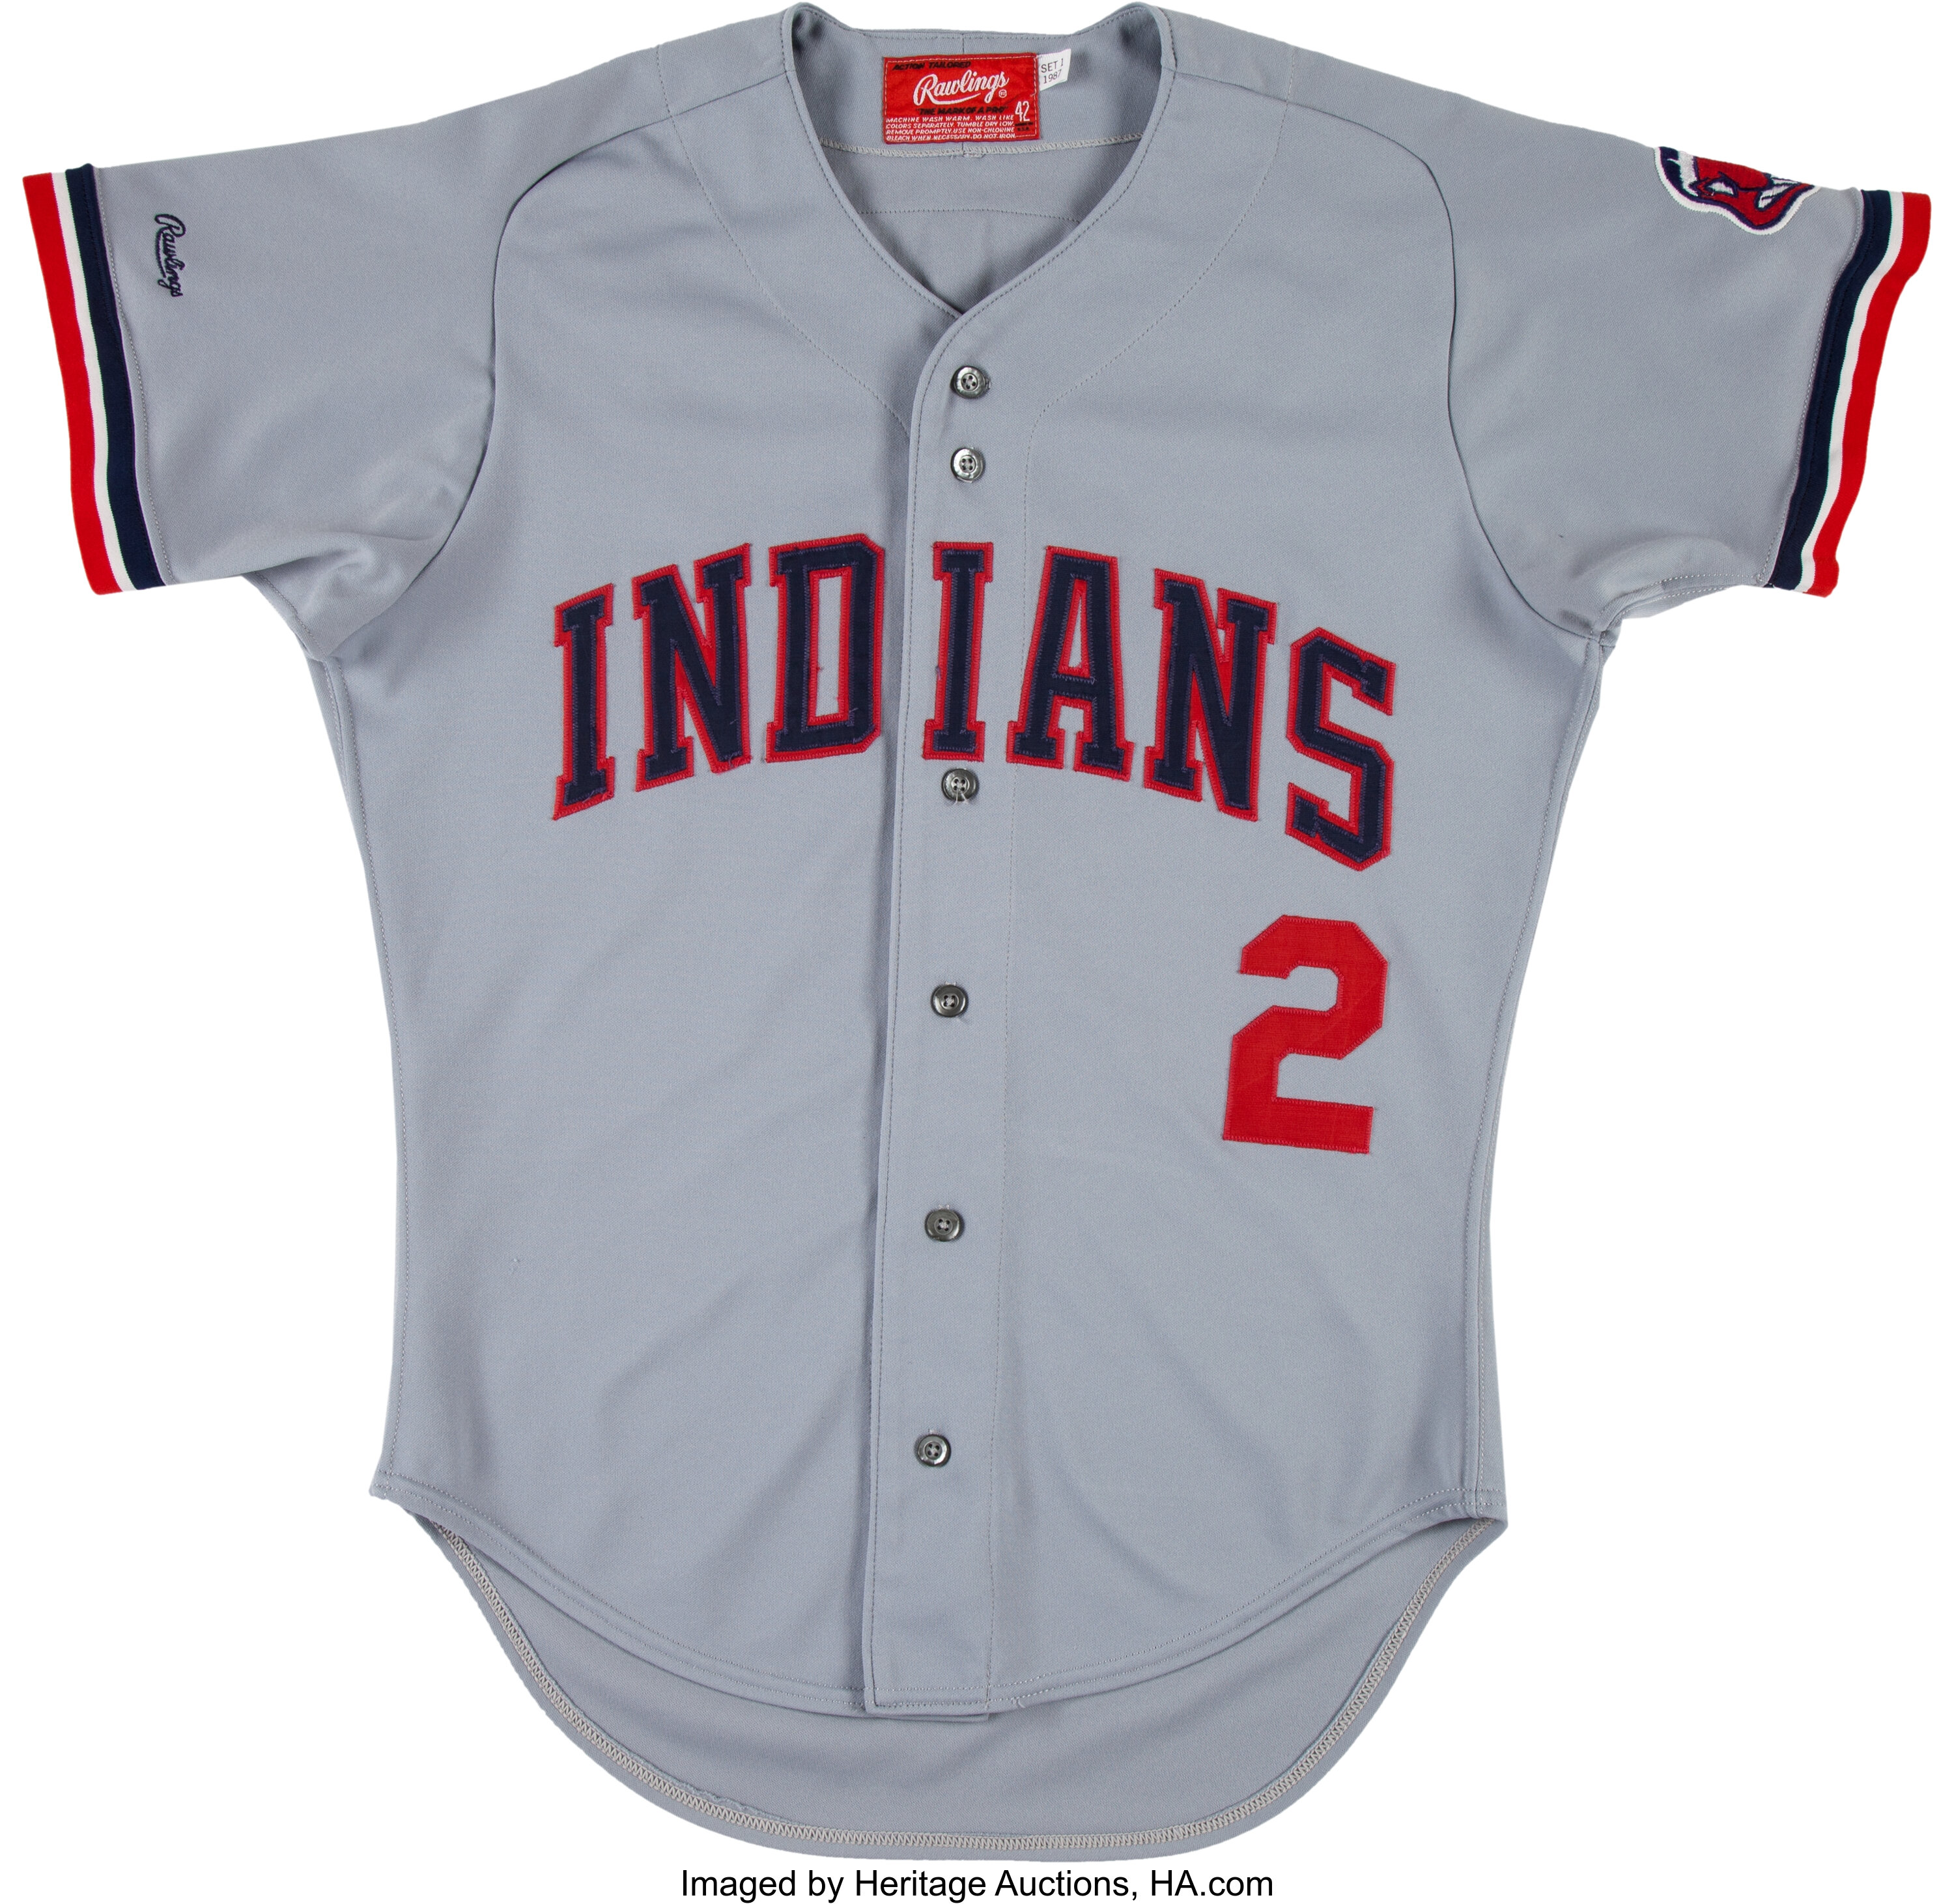 Cleveland Indians 1981 uniform artwork, This is a highly de…